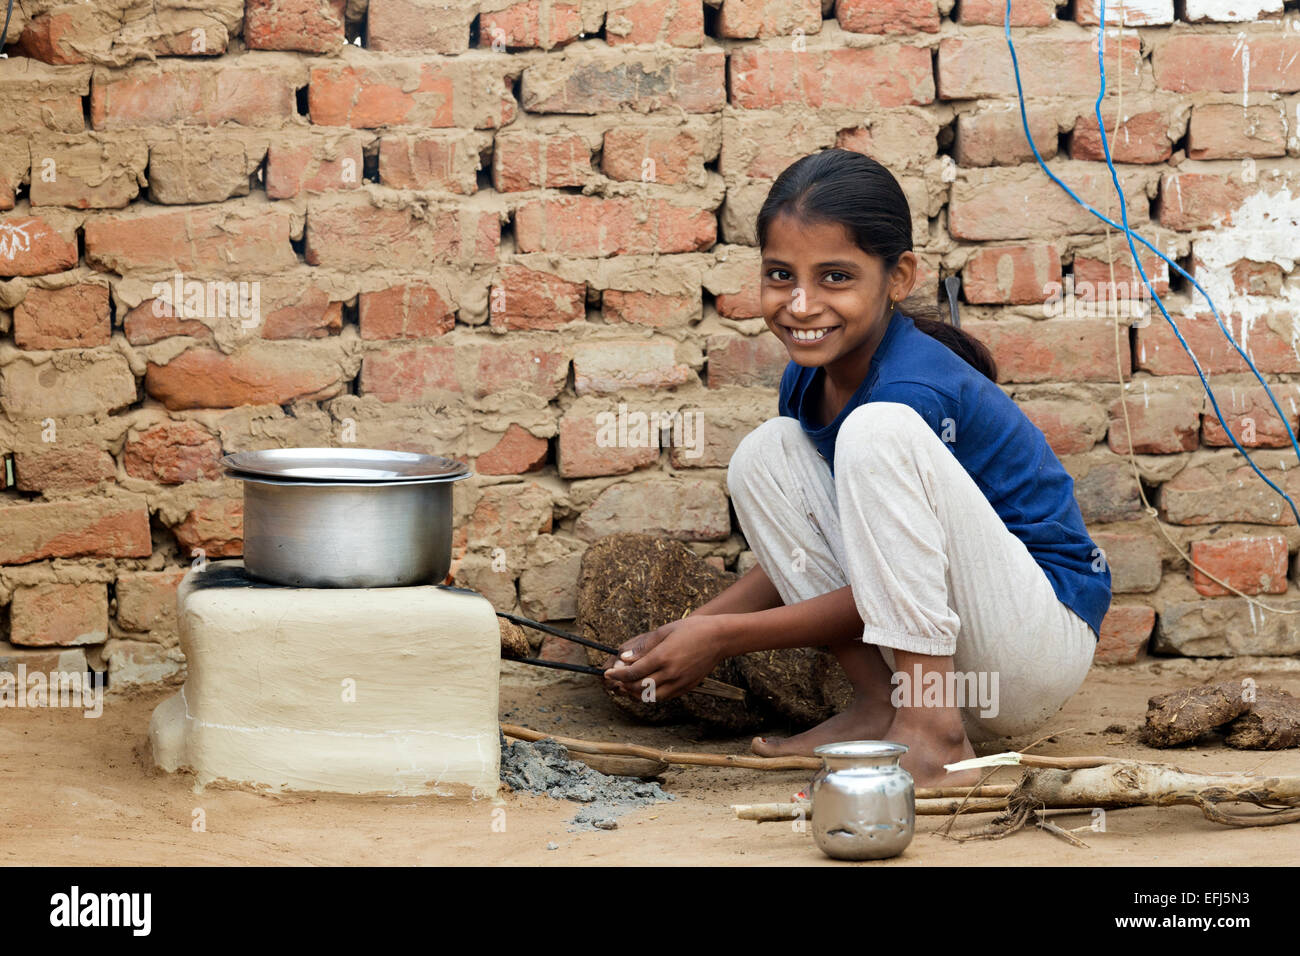 India, Uttar Pradesh, Agra, Indian girl tending to outdoor fire using buffalo dung as fuel. Stock Photo